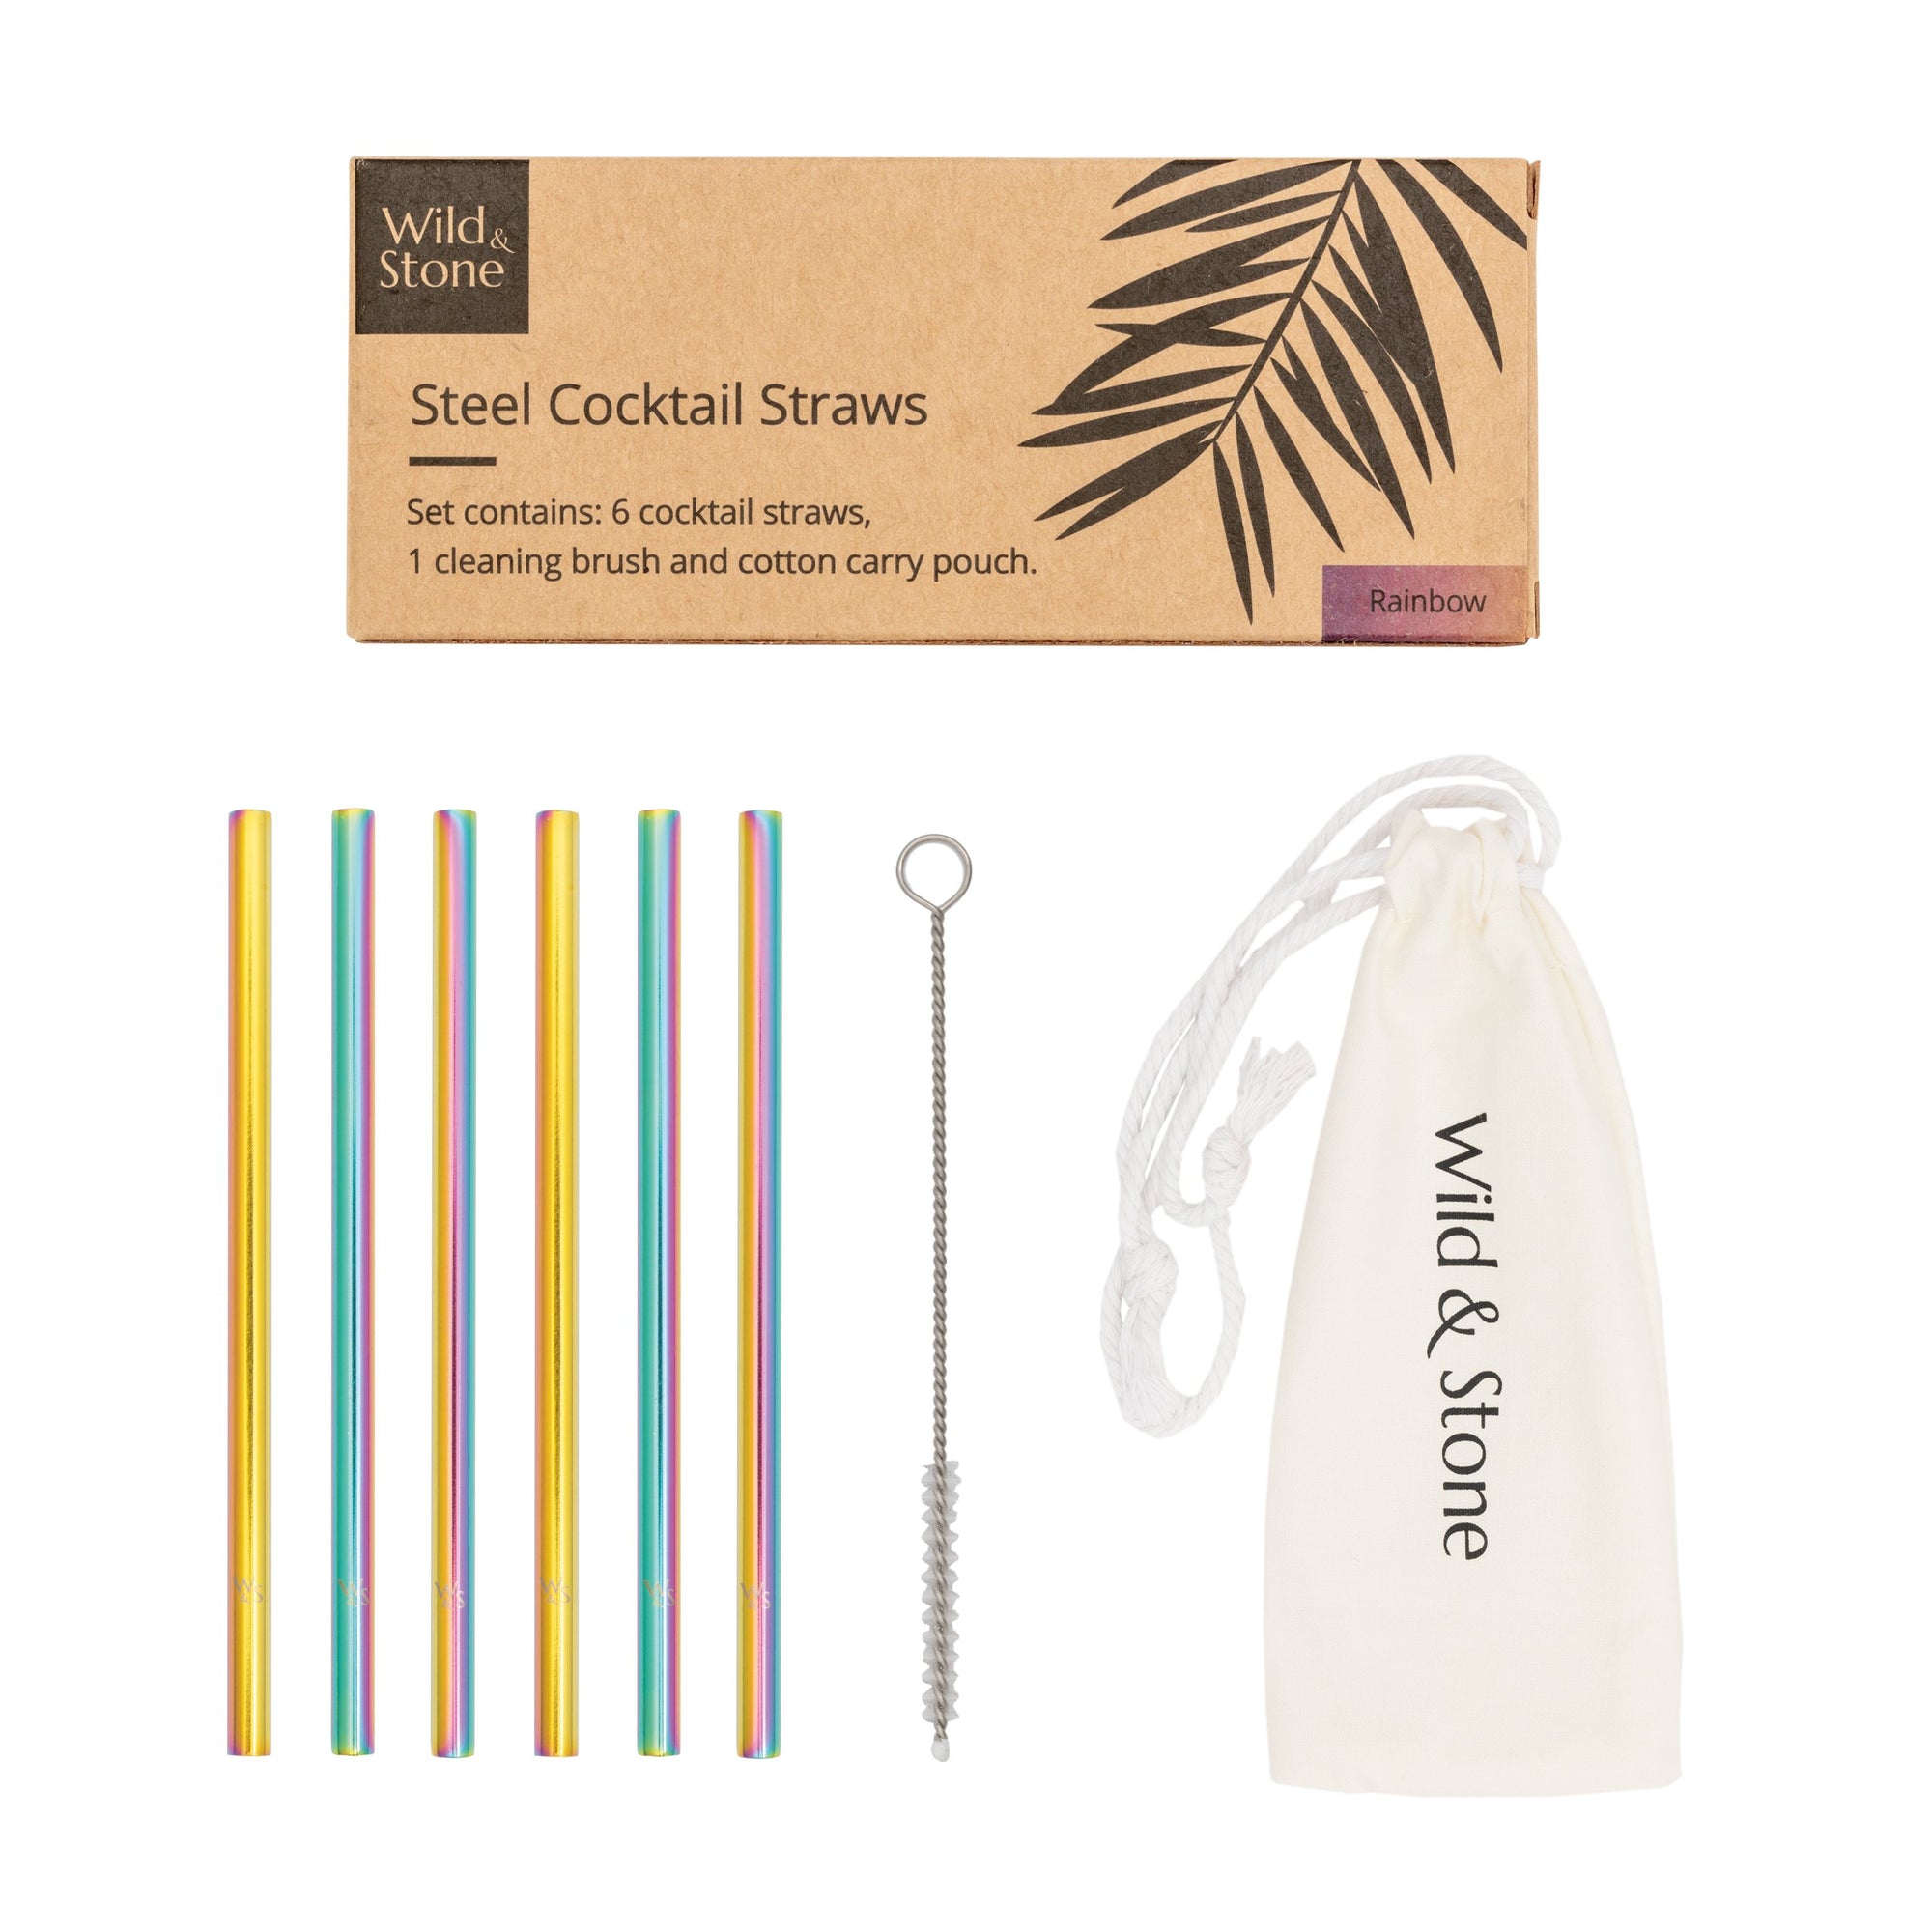 Reusable Steel Cocktail Straws - Rainbow - 6 Pack